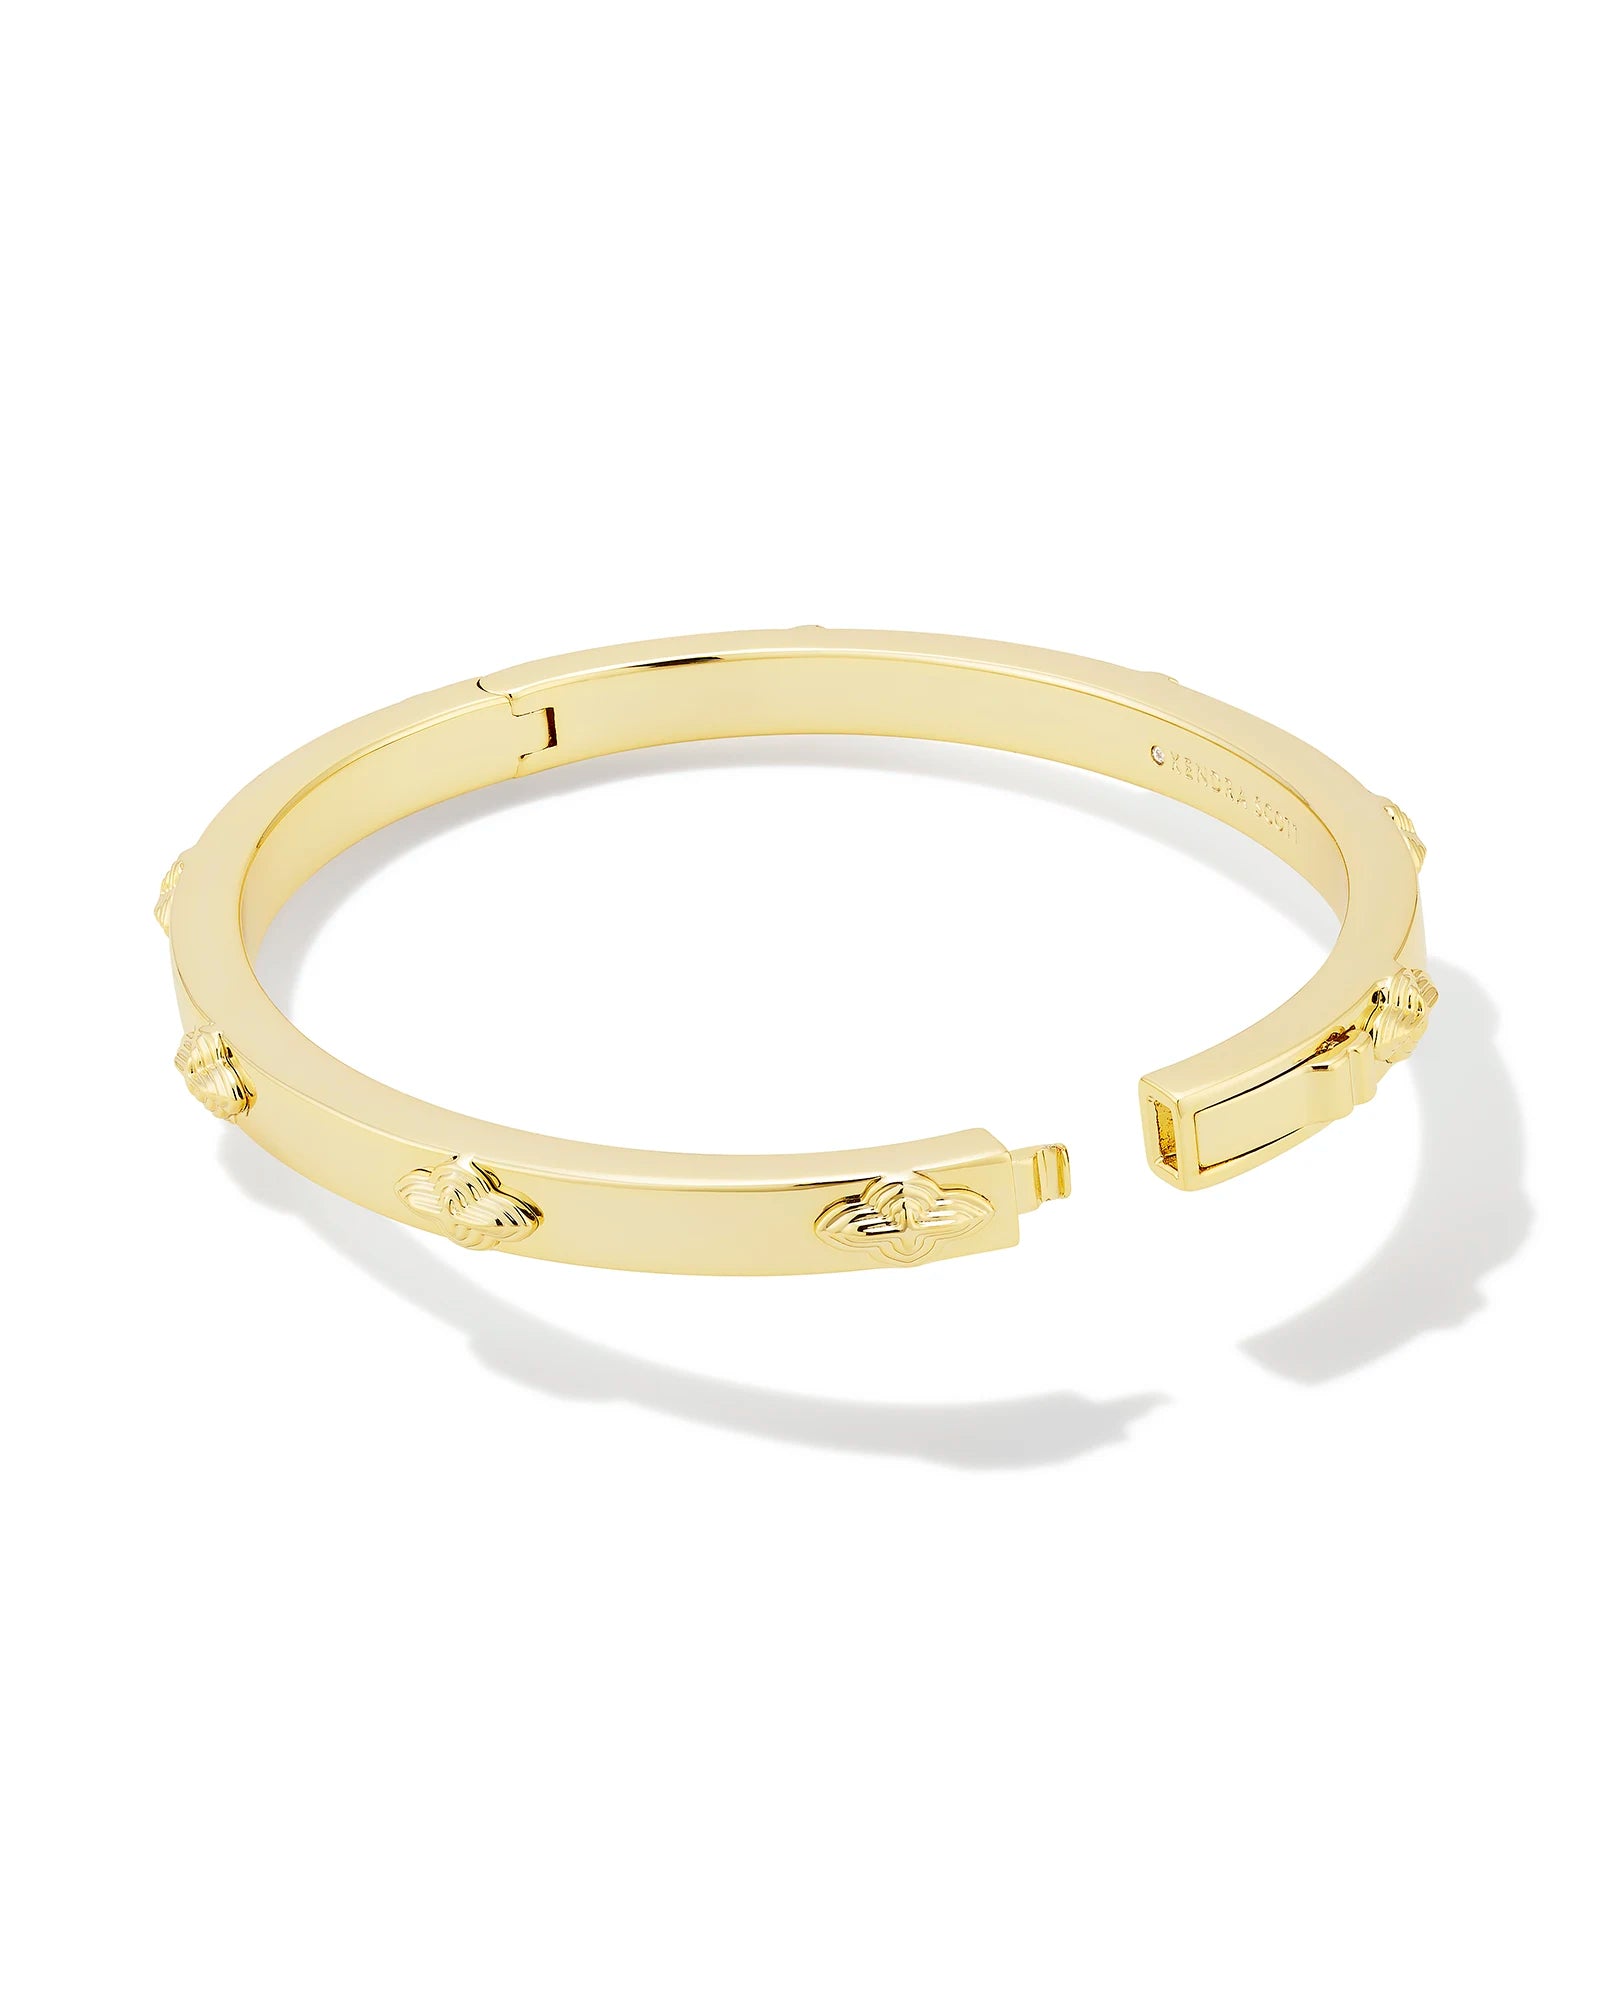 Kendra Scott | Abbie Metal Bangle Bracelet in Gold - Giddy Up Glamour Boutique